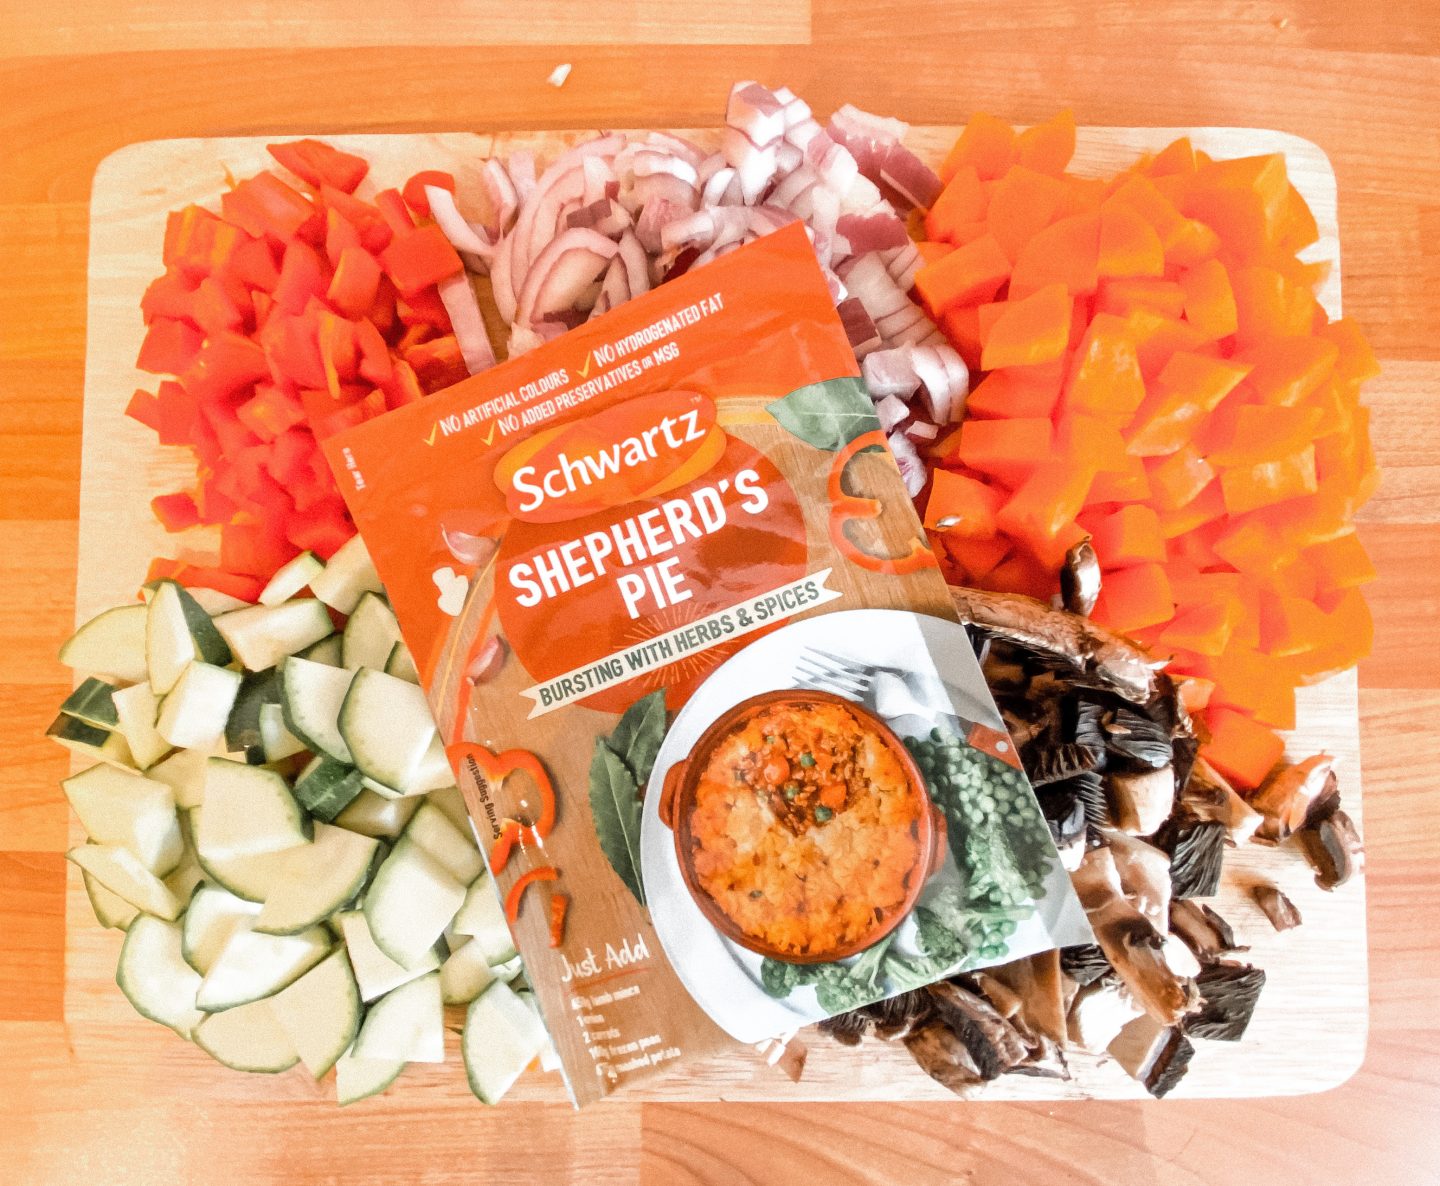 Schwartz Shepherd's Pie mix with chopped vegetables